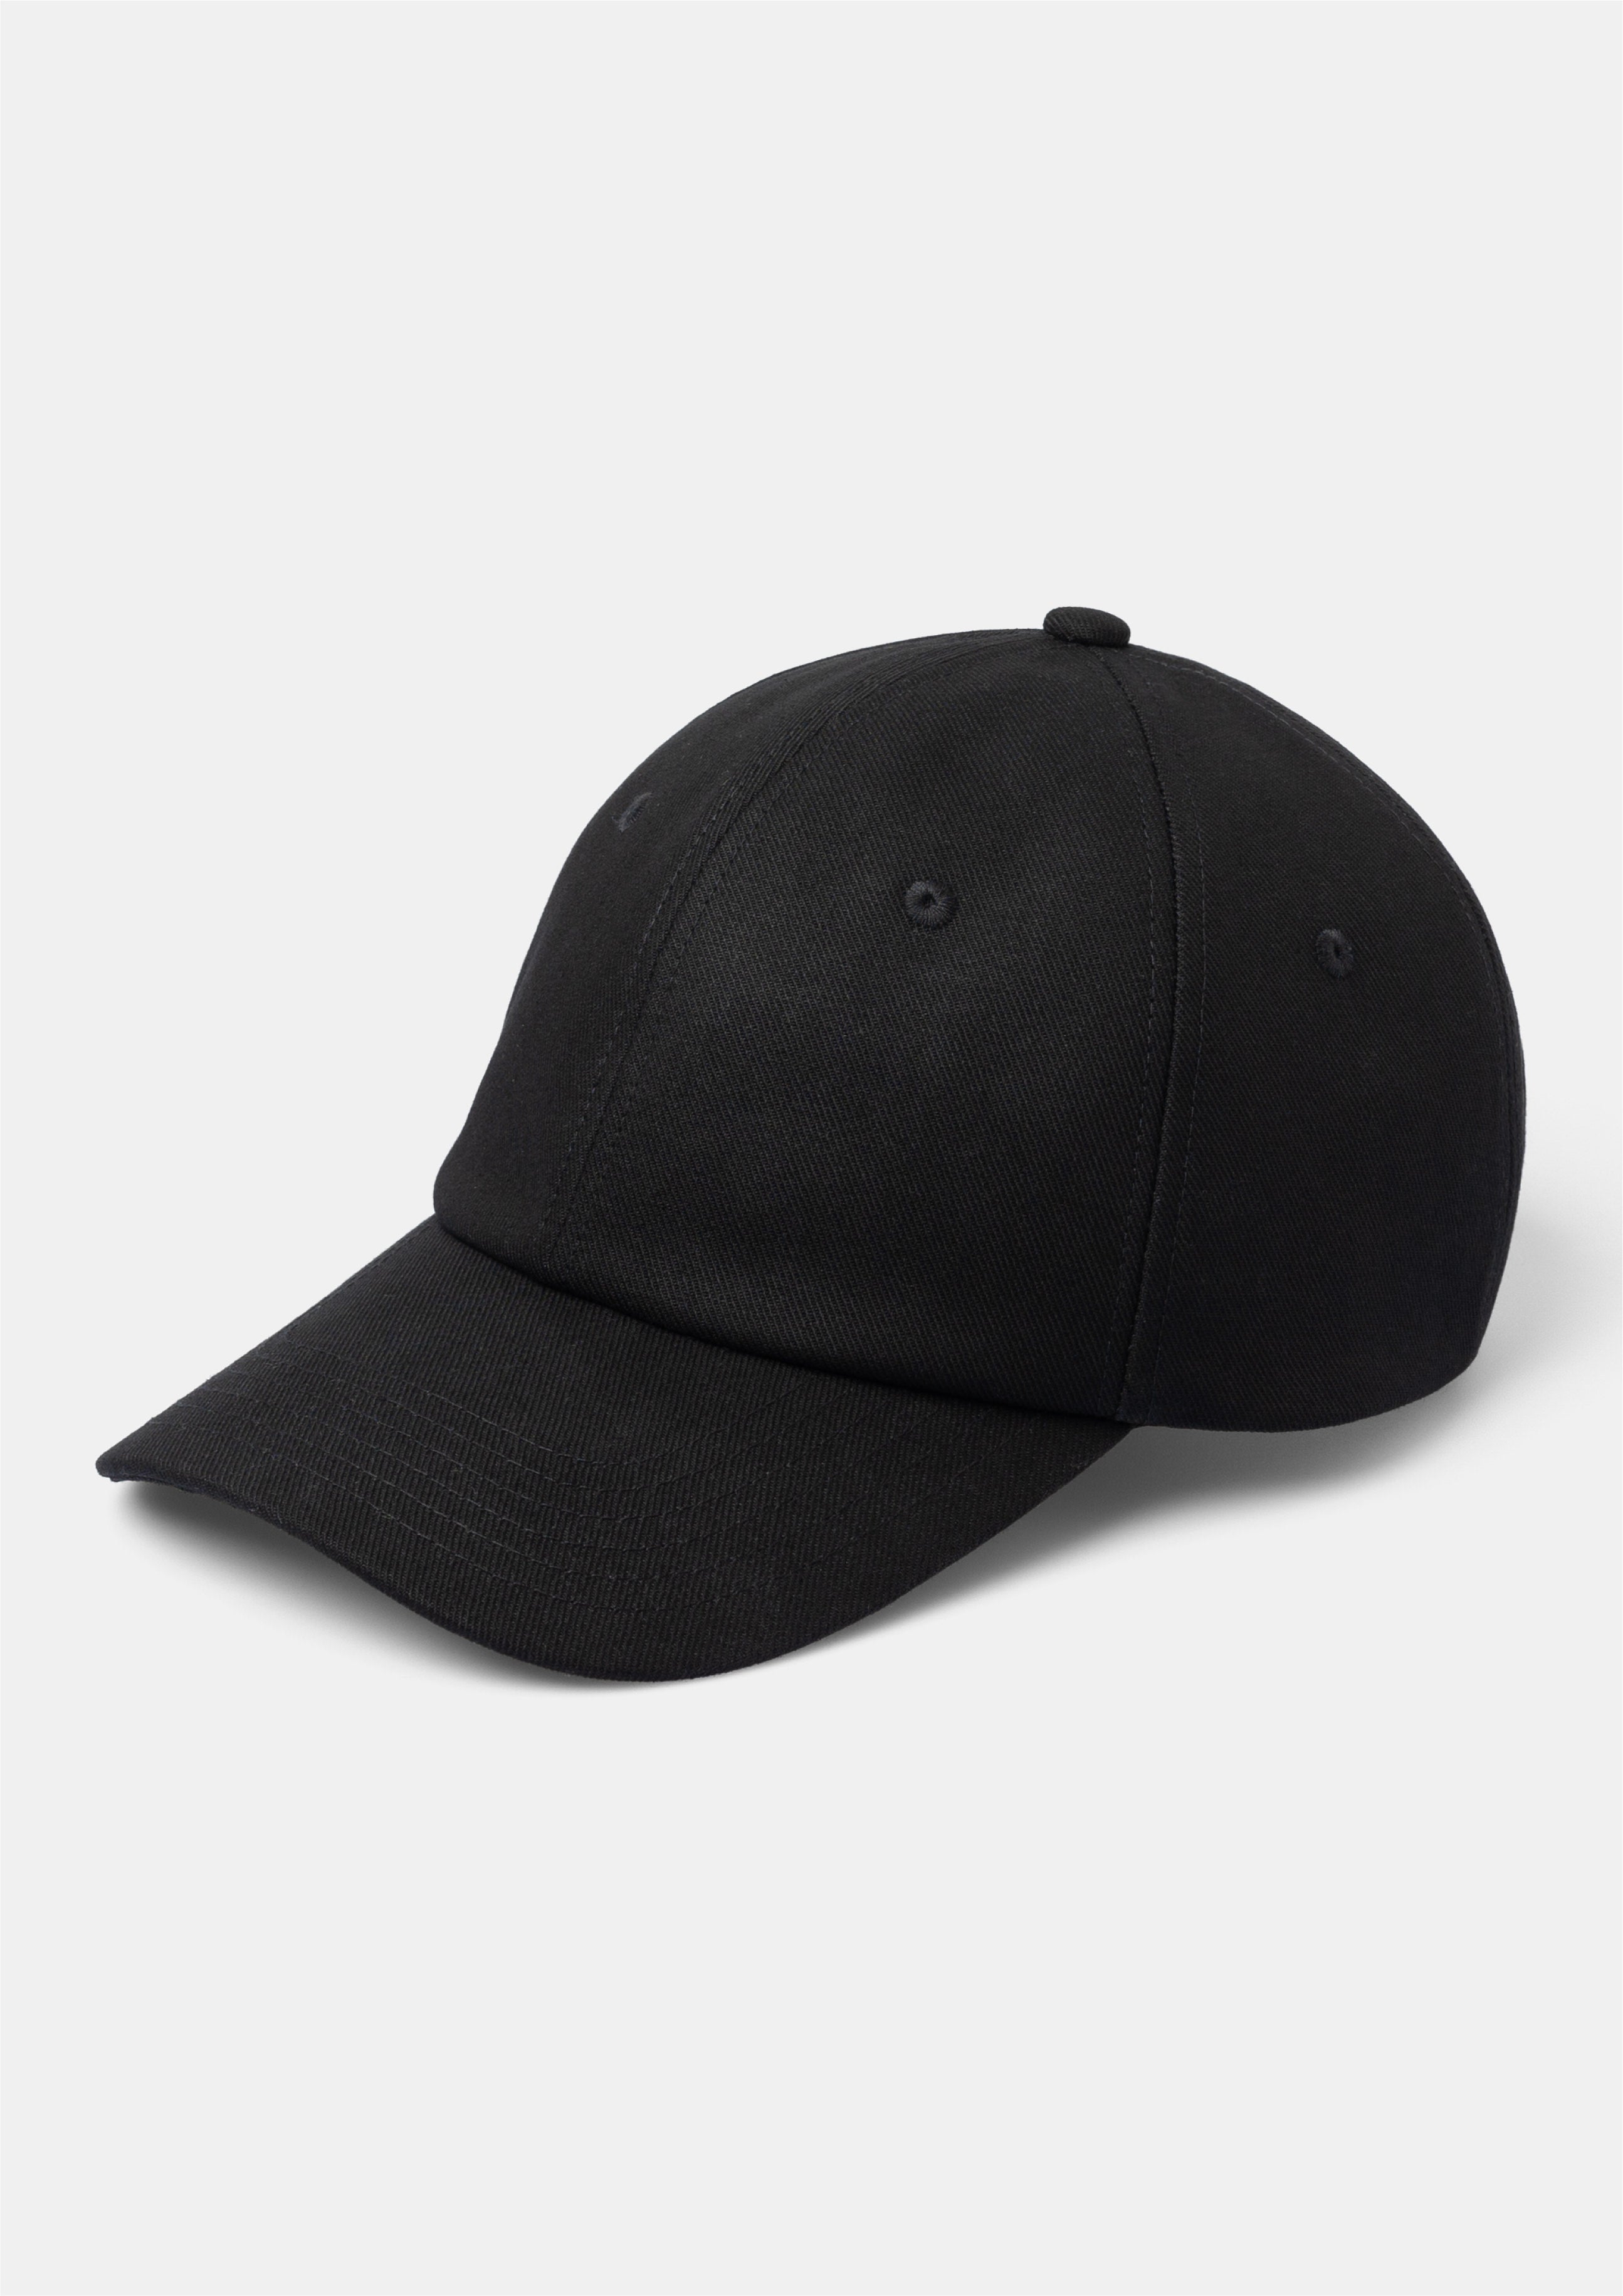 UNNAMED HEADWEAR DEEP CAP BLACK 黒 キャップ